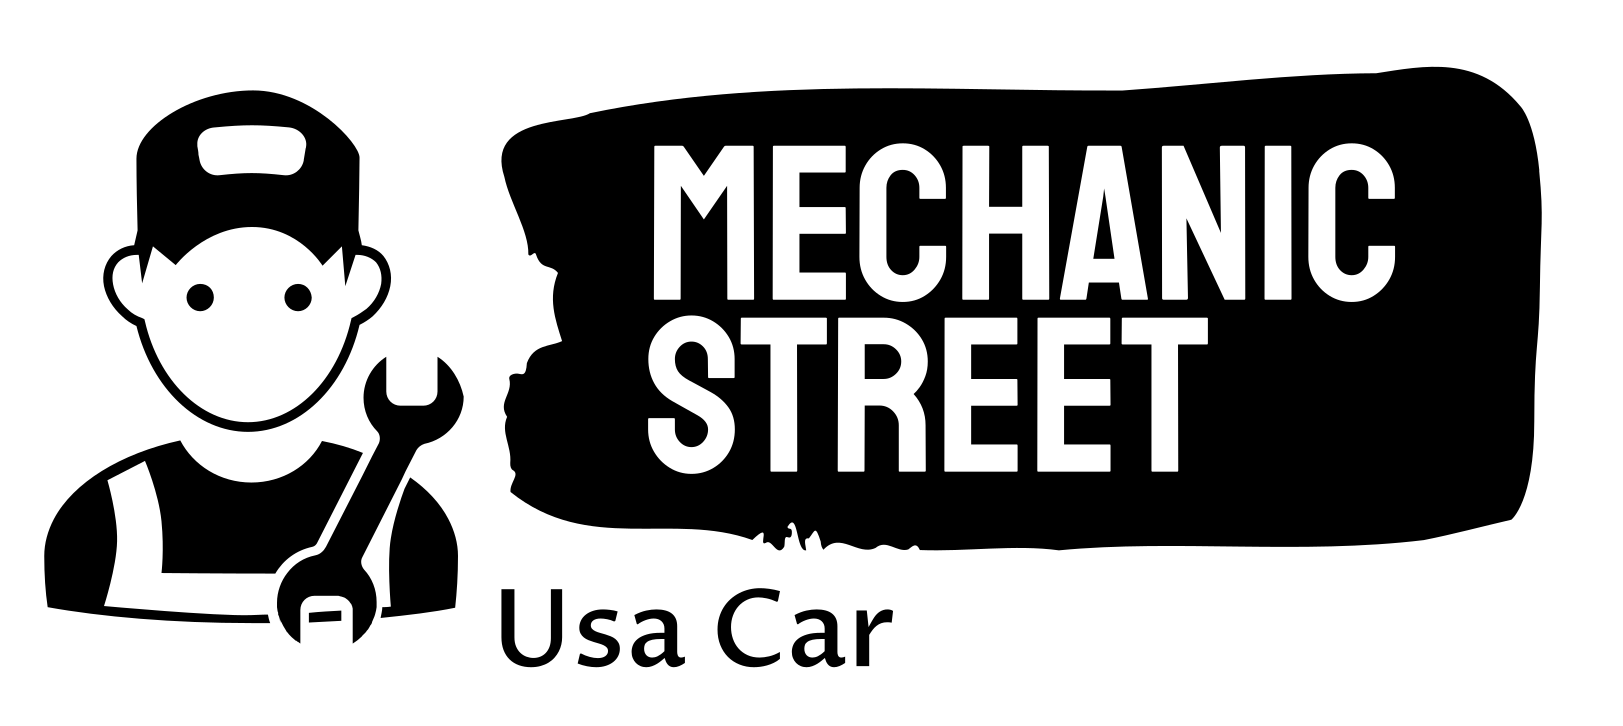 Mechanic Street